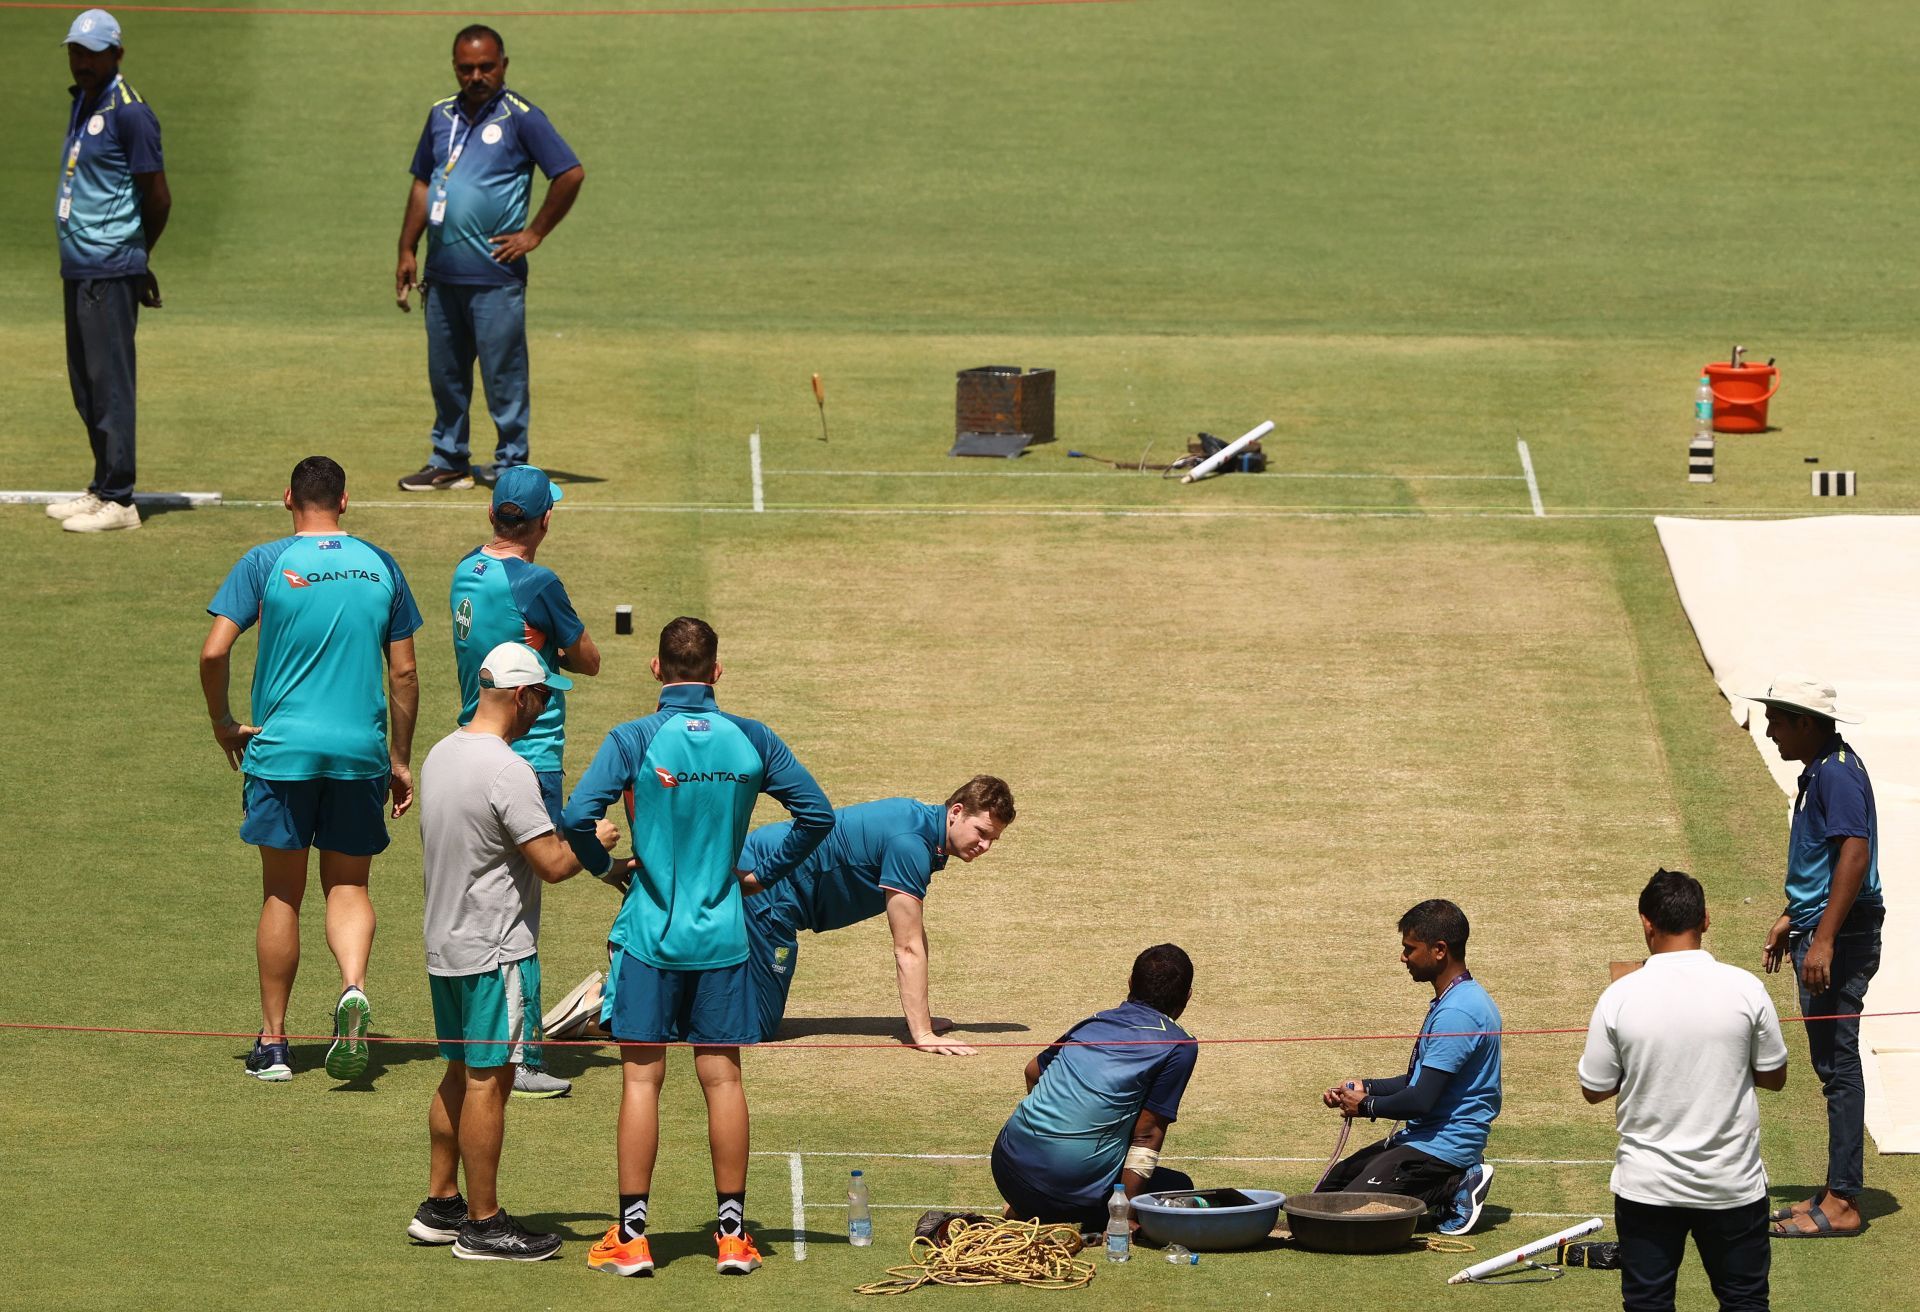 Australia Tour of India Training Session (Image: Getty)